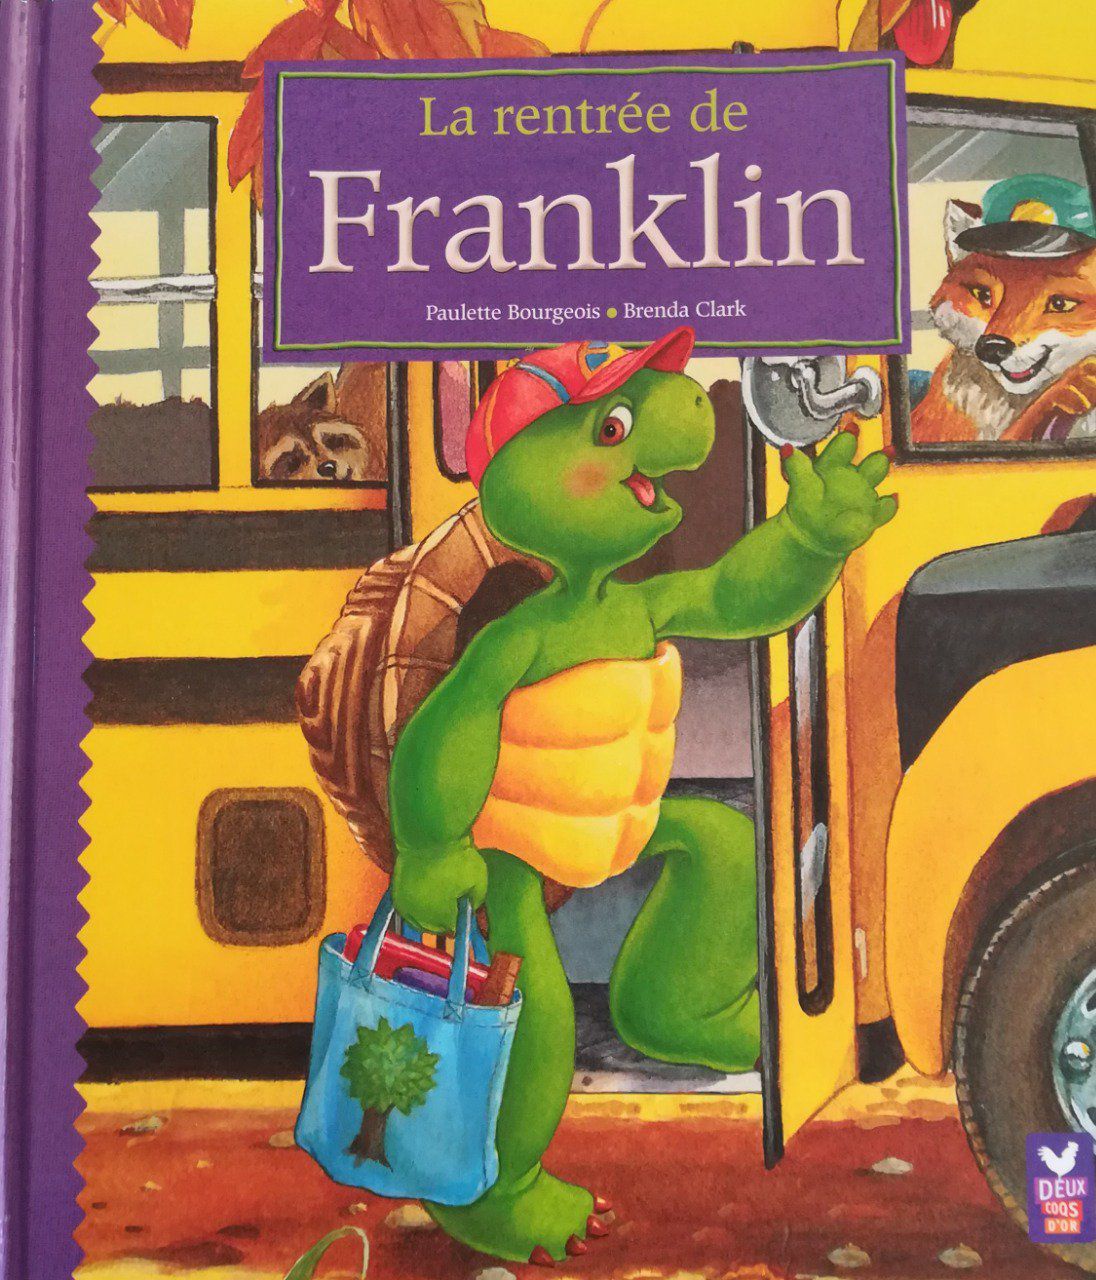 La rentrée de Franklin